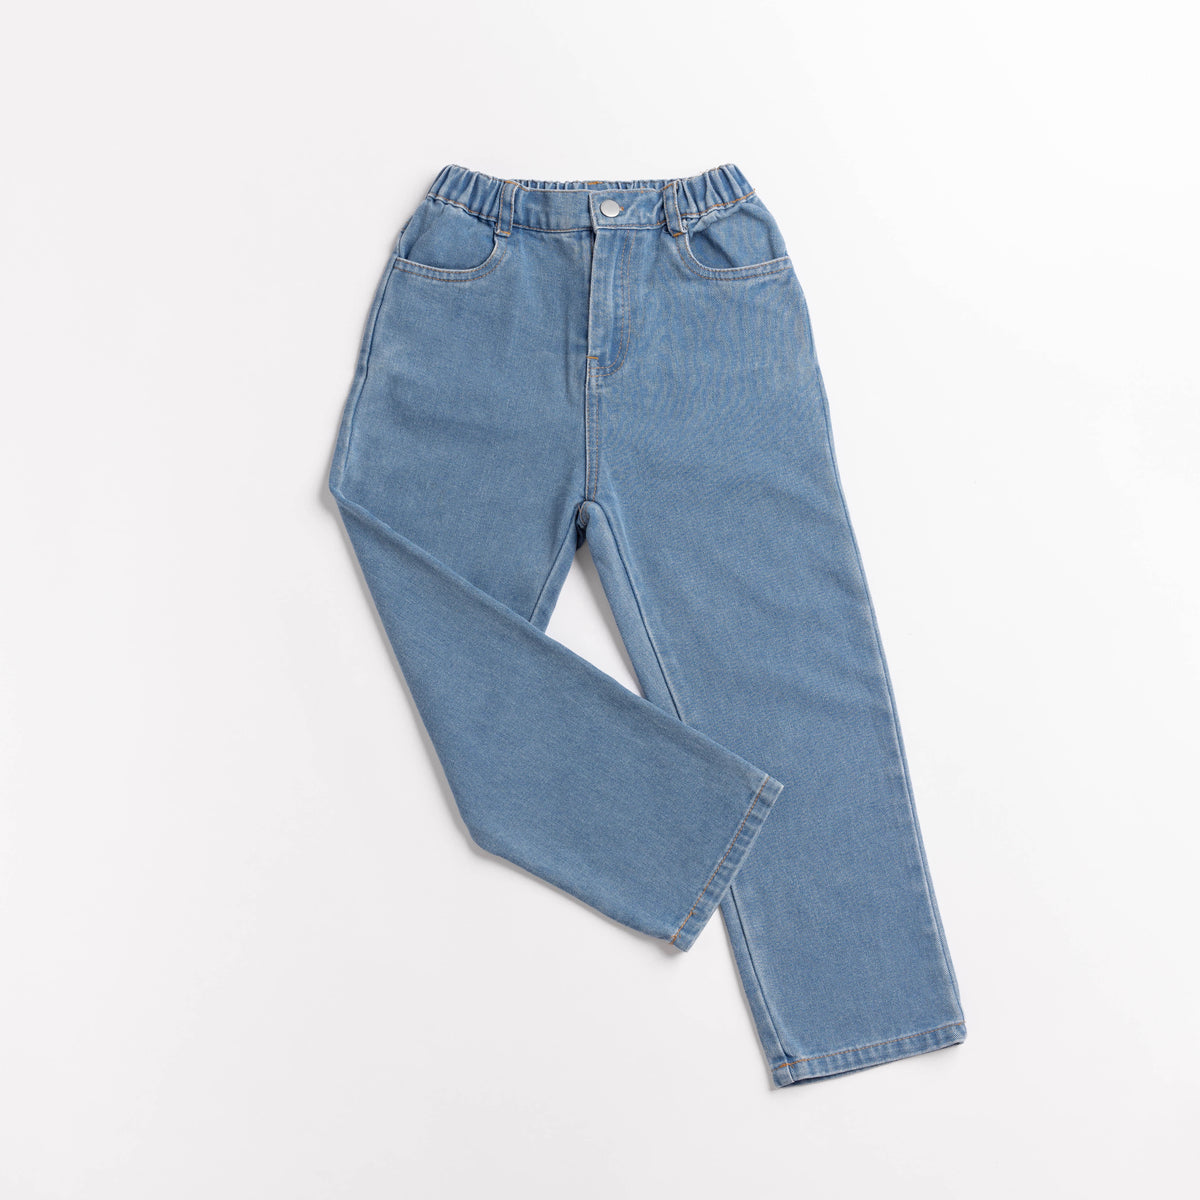 Classic Blue Jean (Size 8-10)